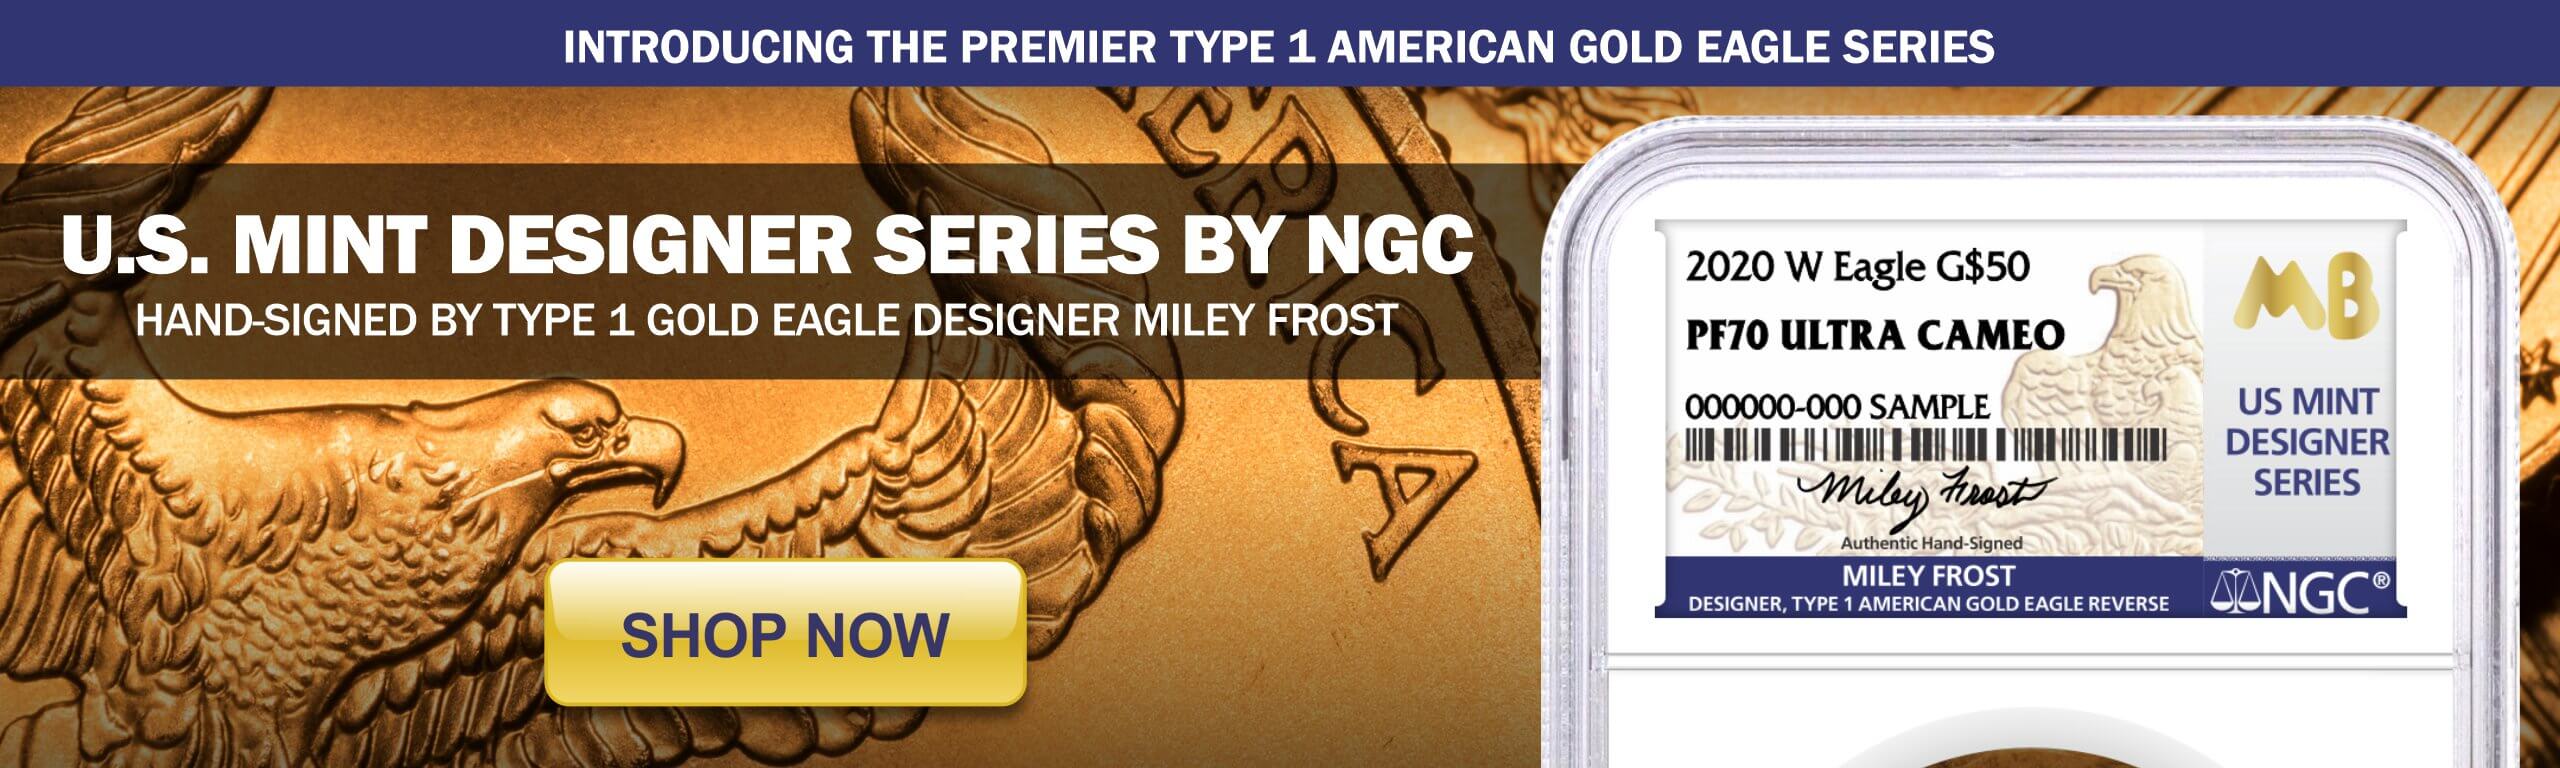 Miley Frost (Busiek) Signed U.S. Mint Designer Series 